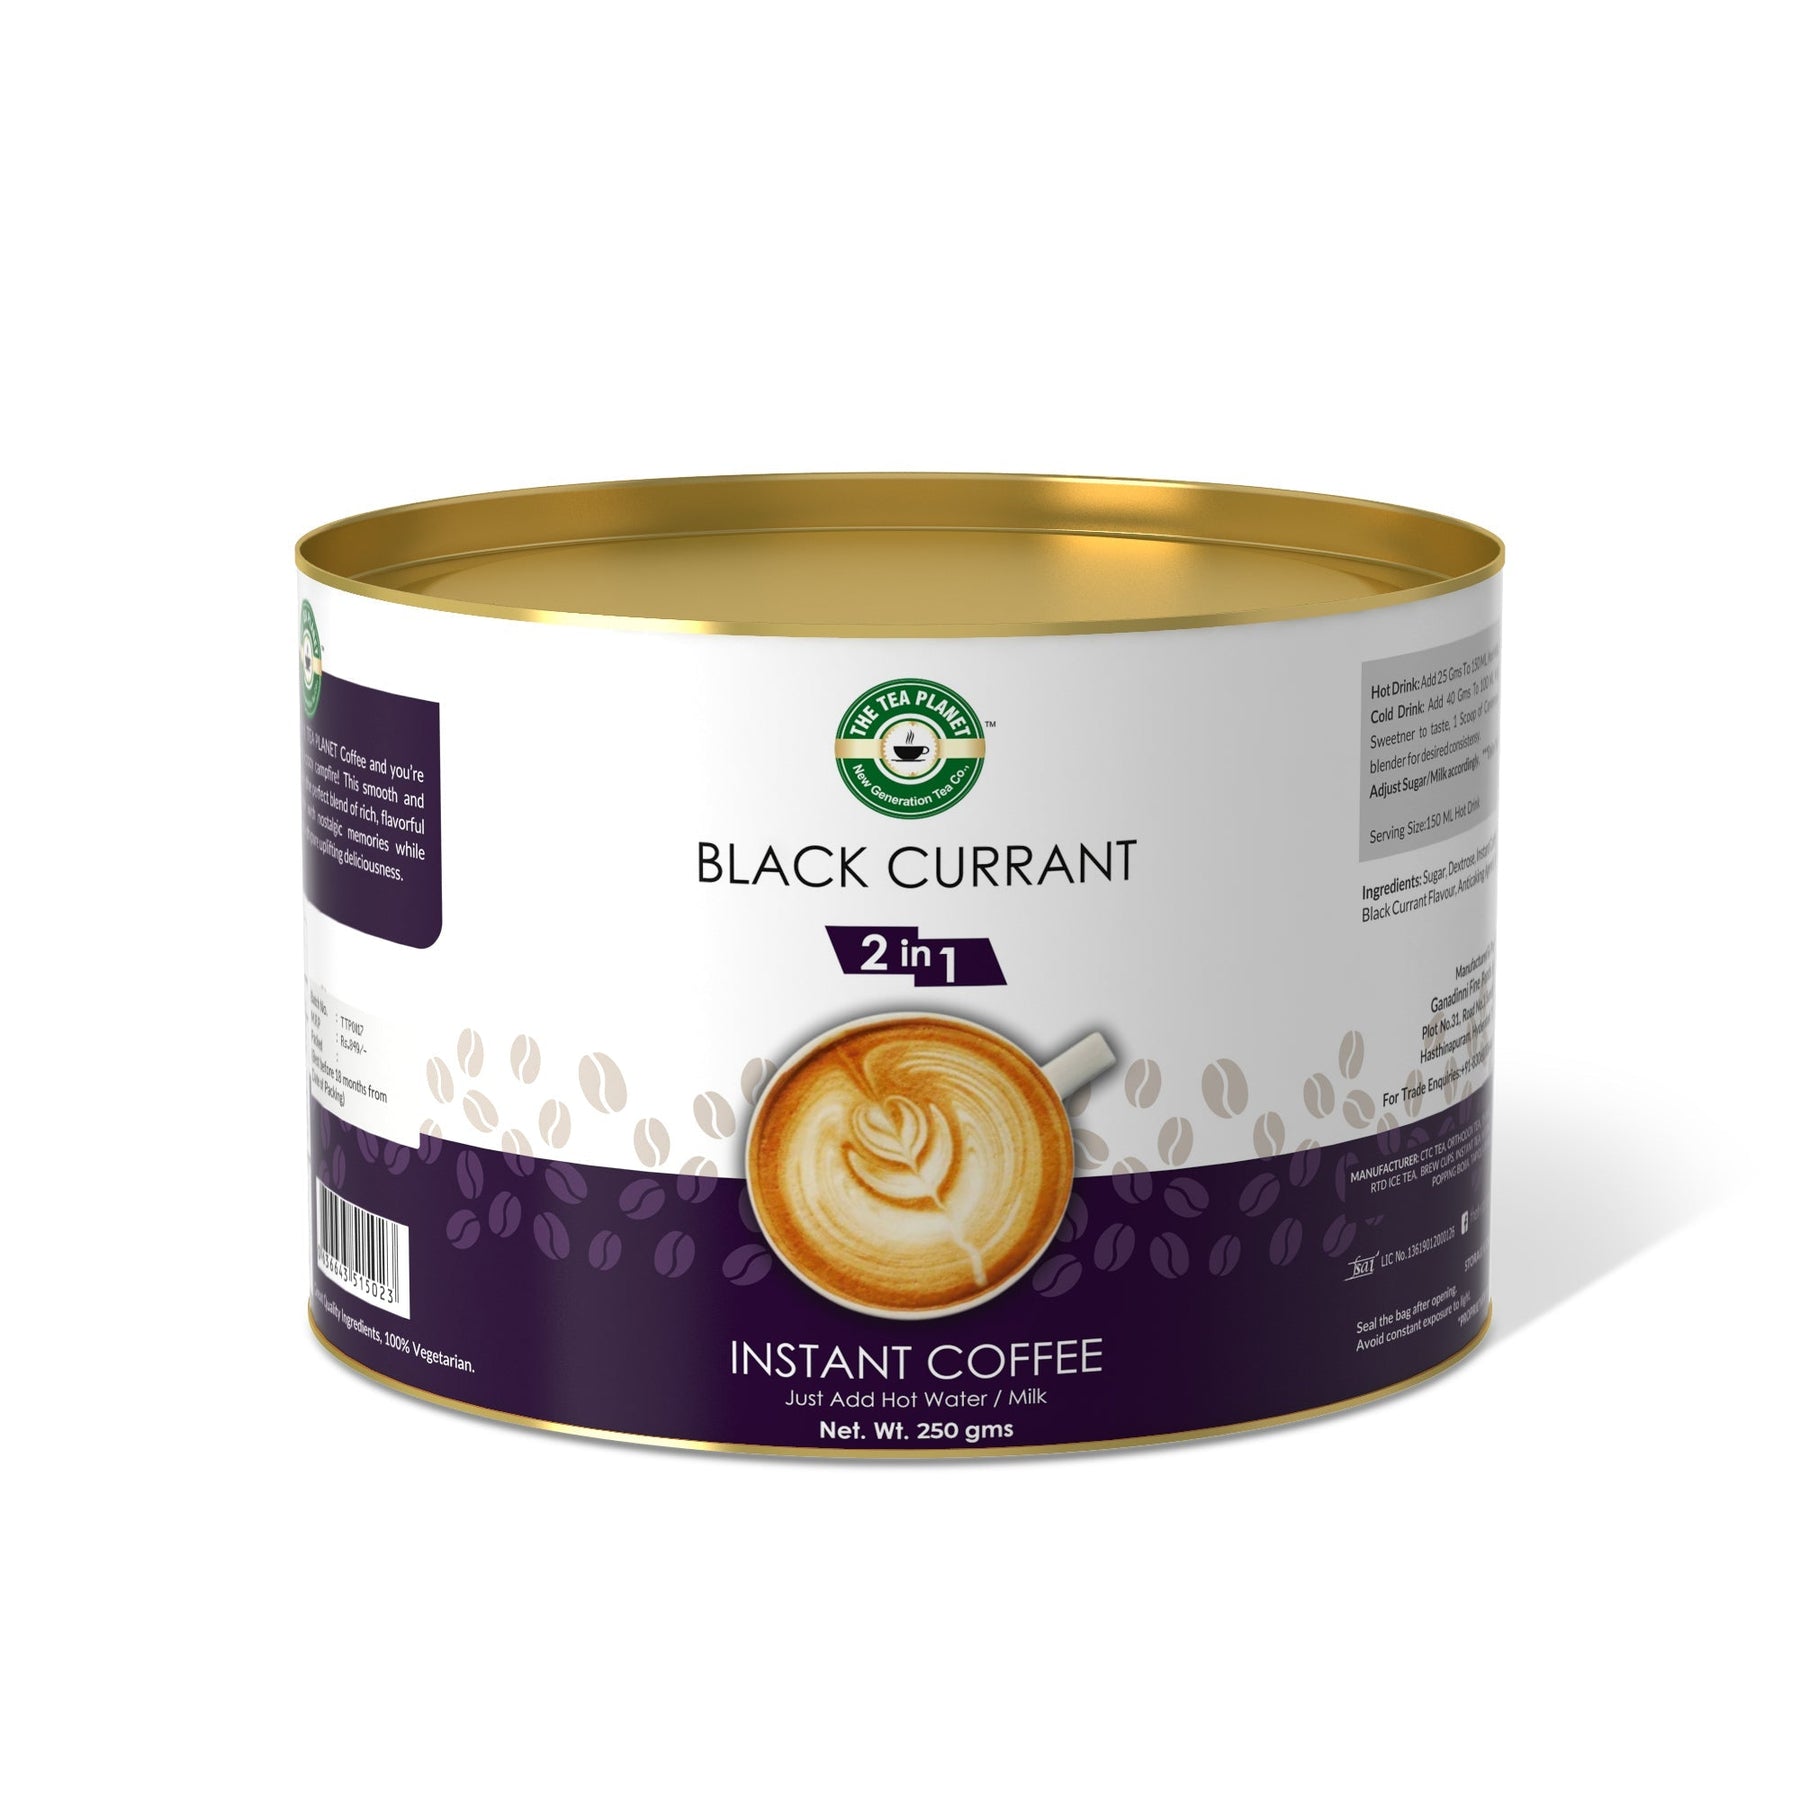 Black Currant Instant Coffee Premix (2 in 1) - 800 gms